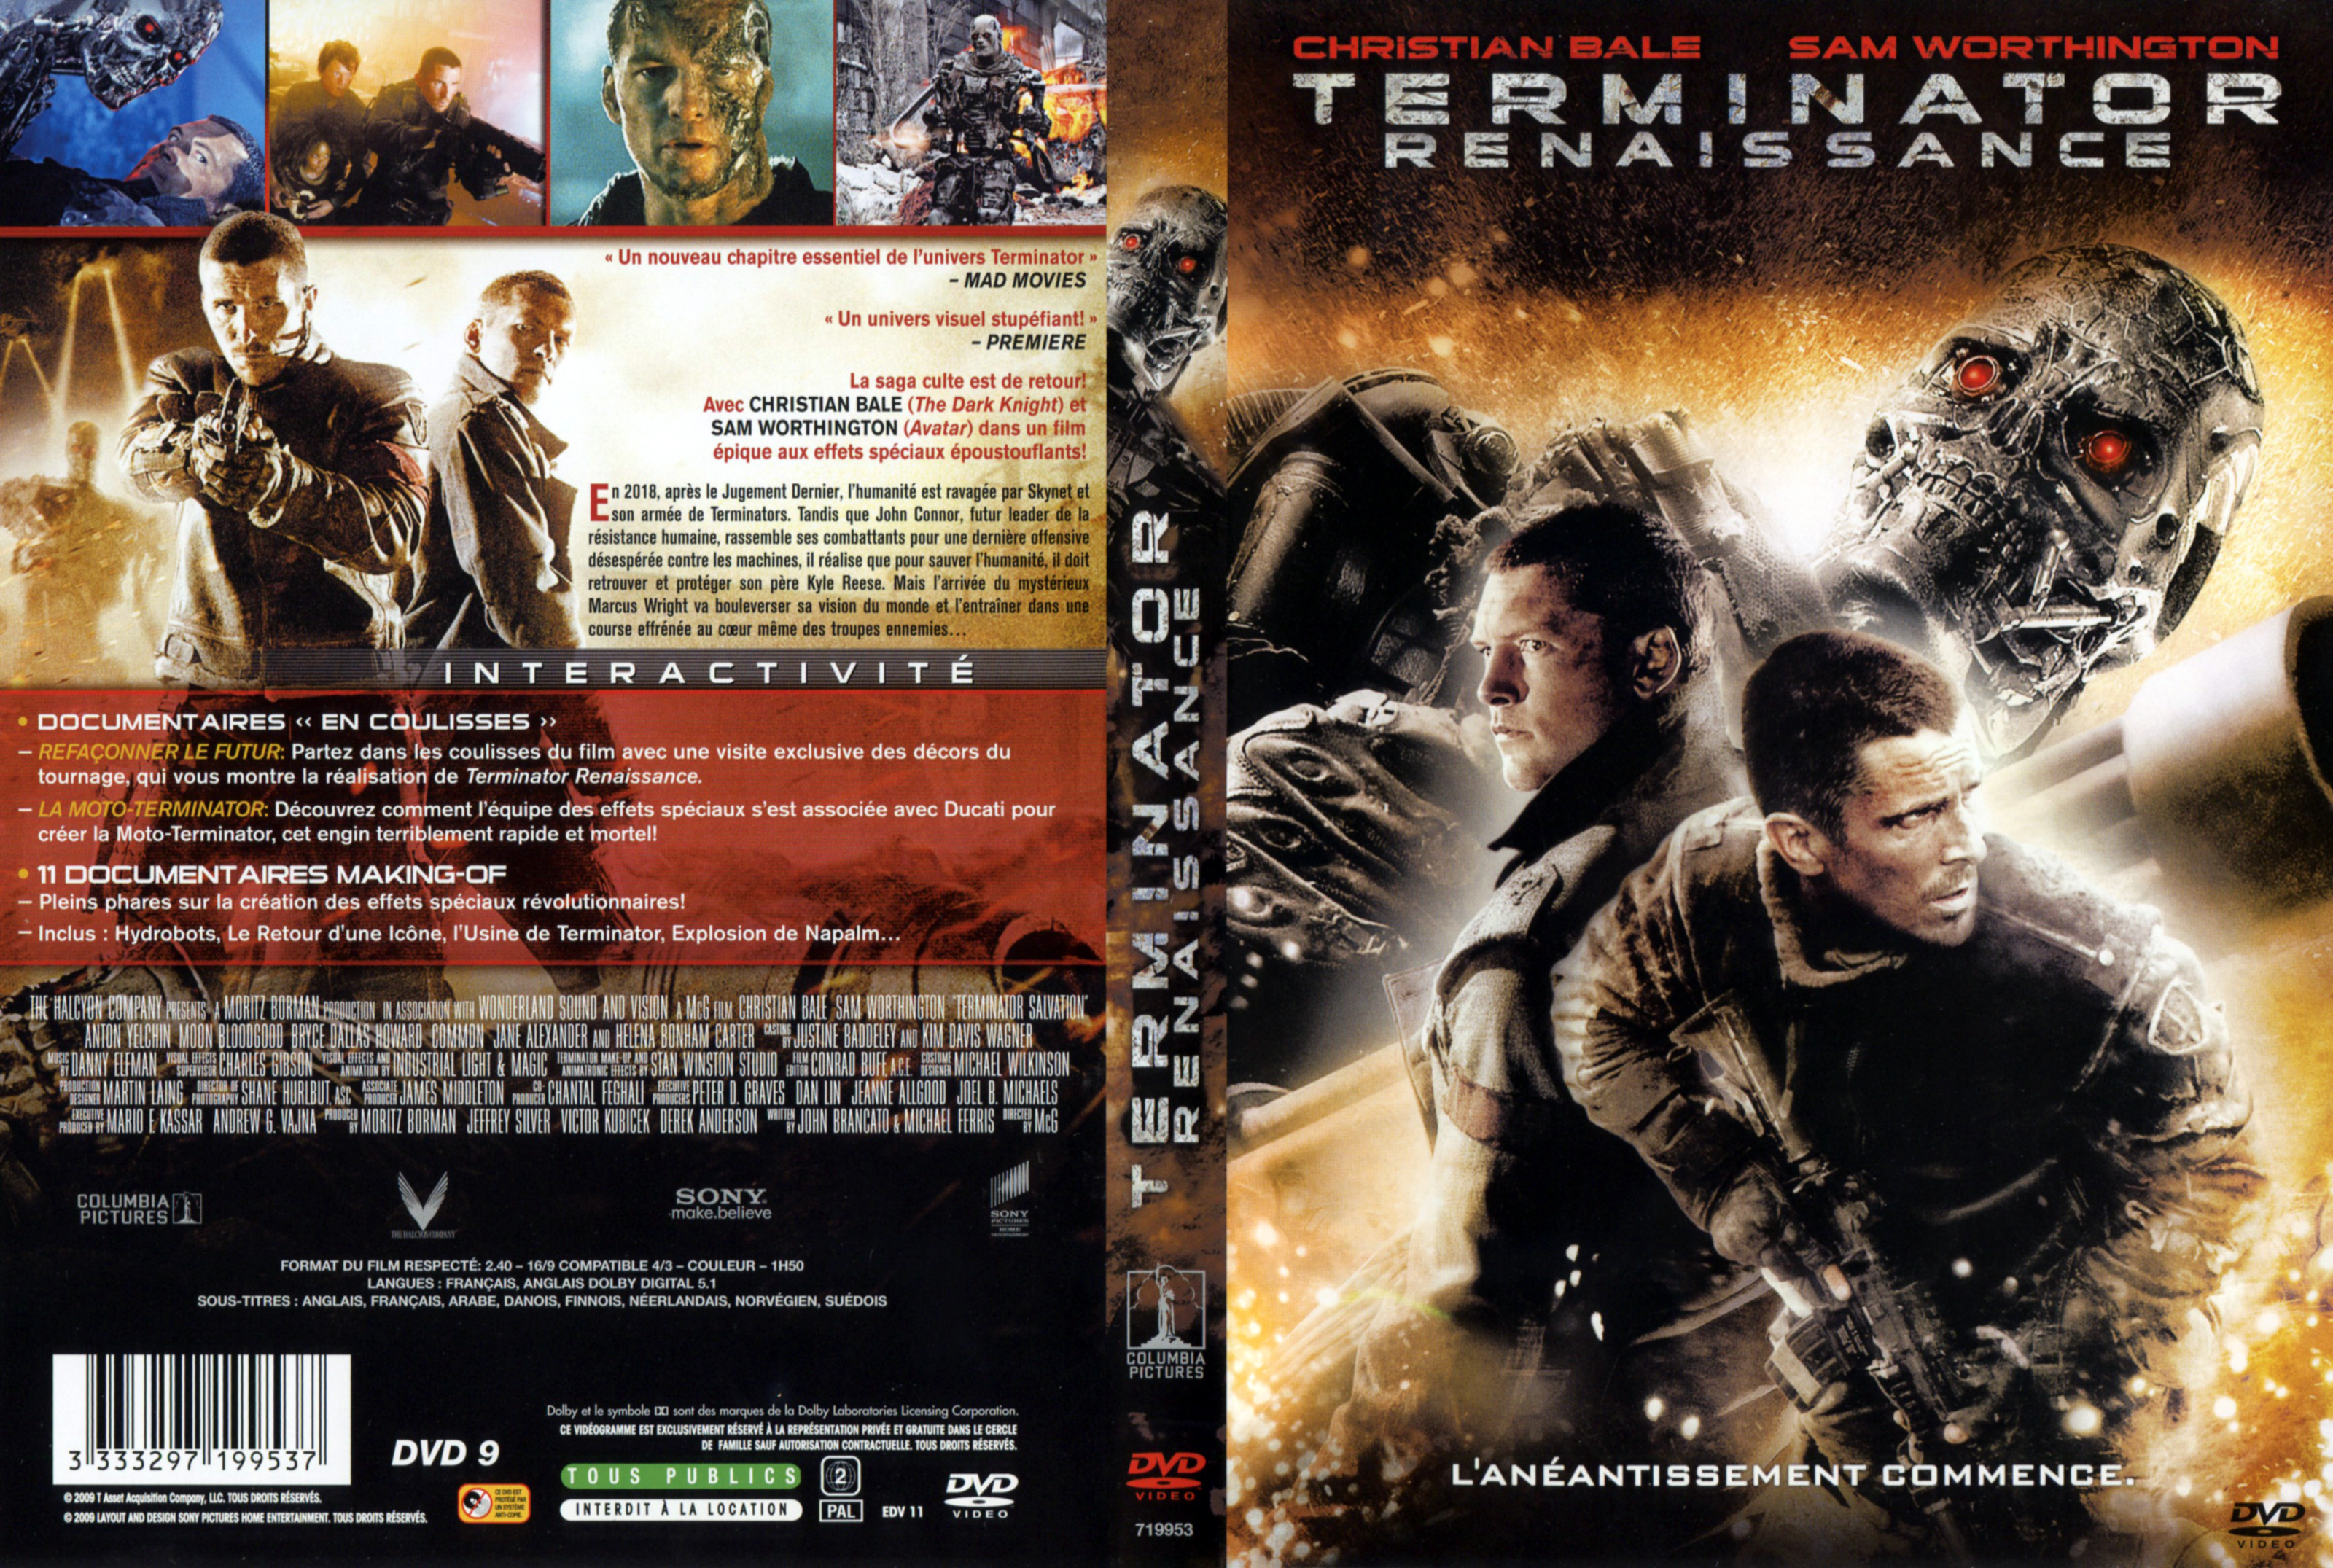 Jaquette DVD Terminator Renaissance v2